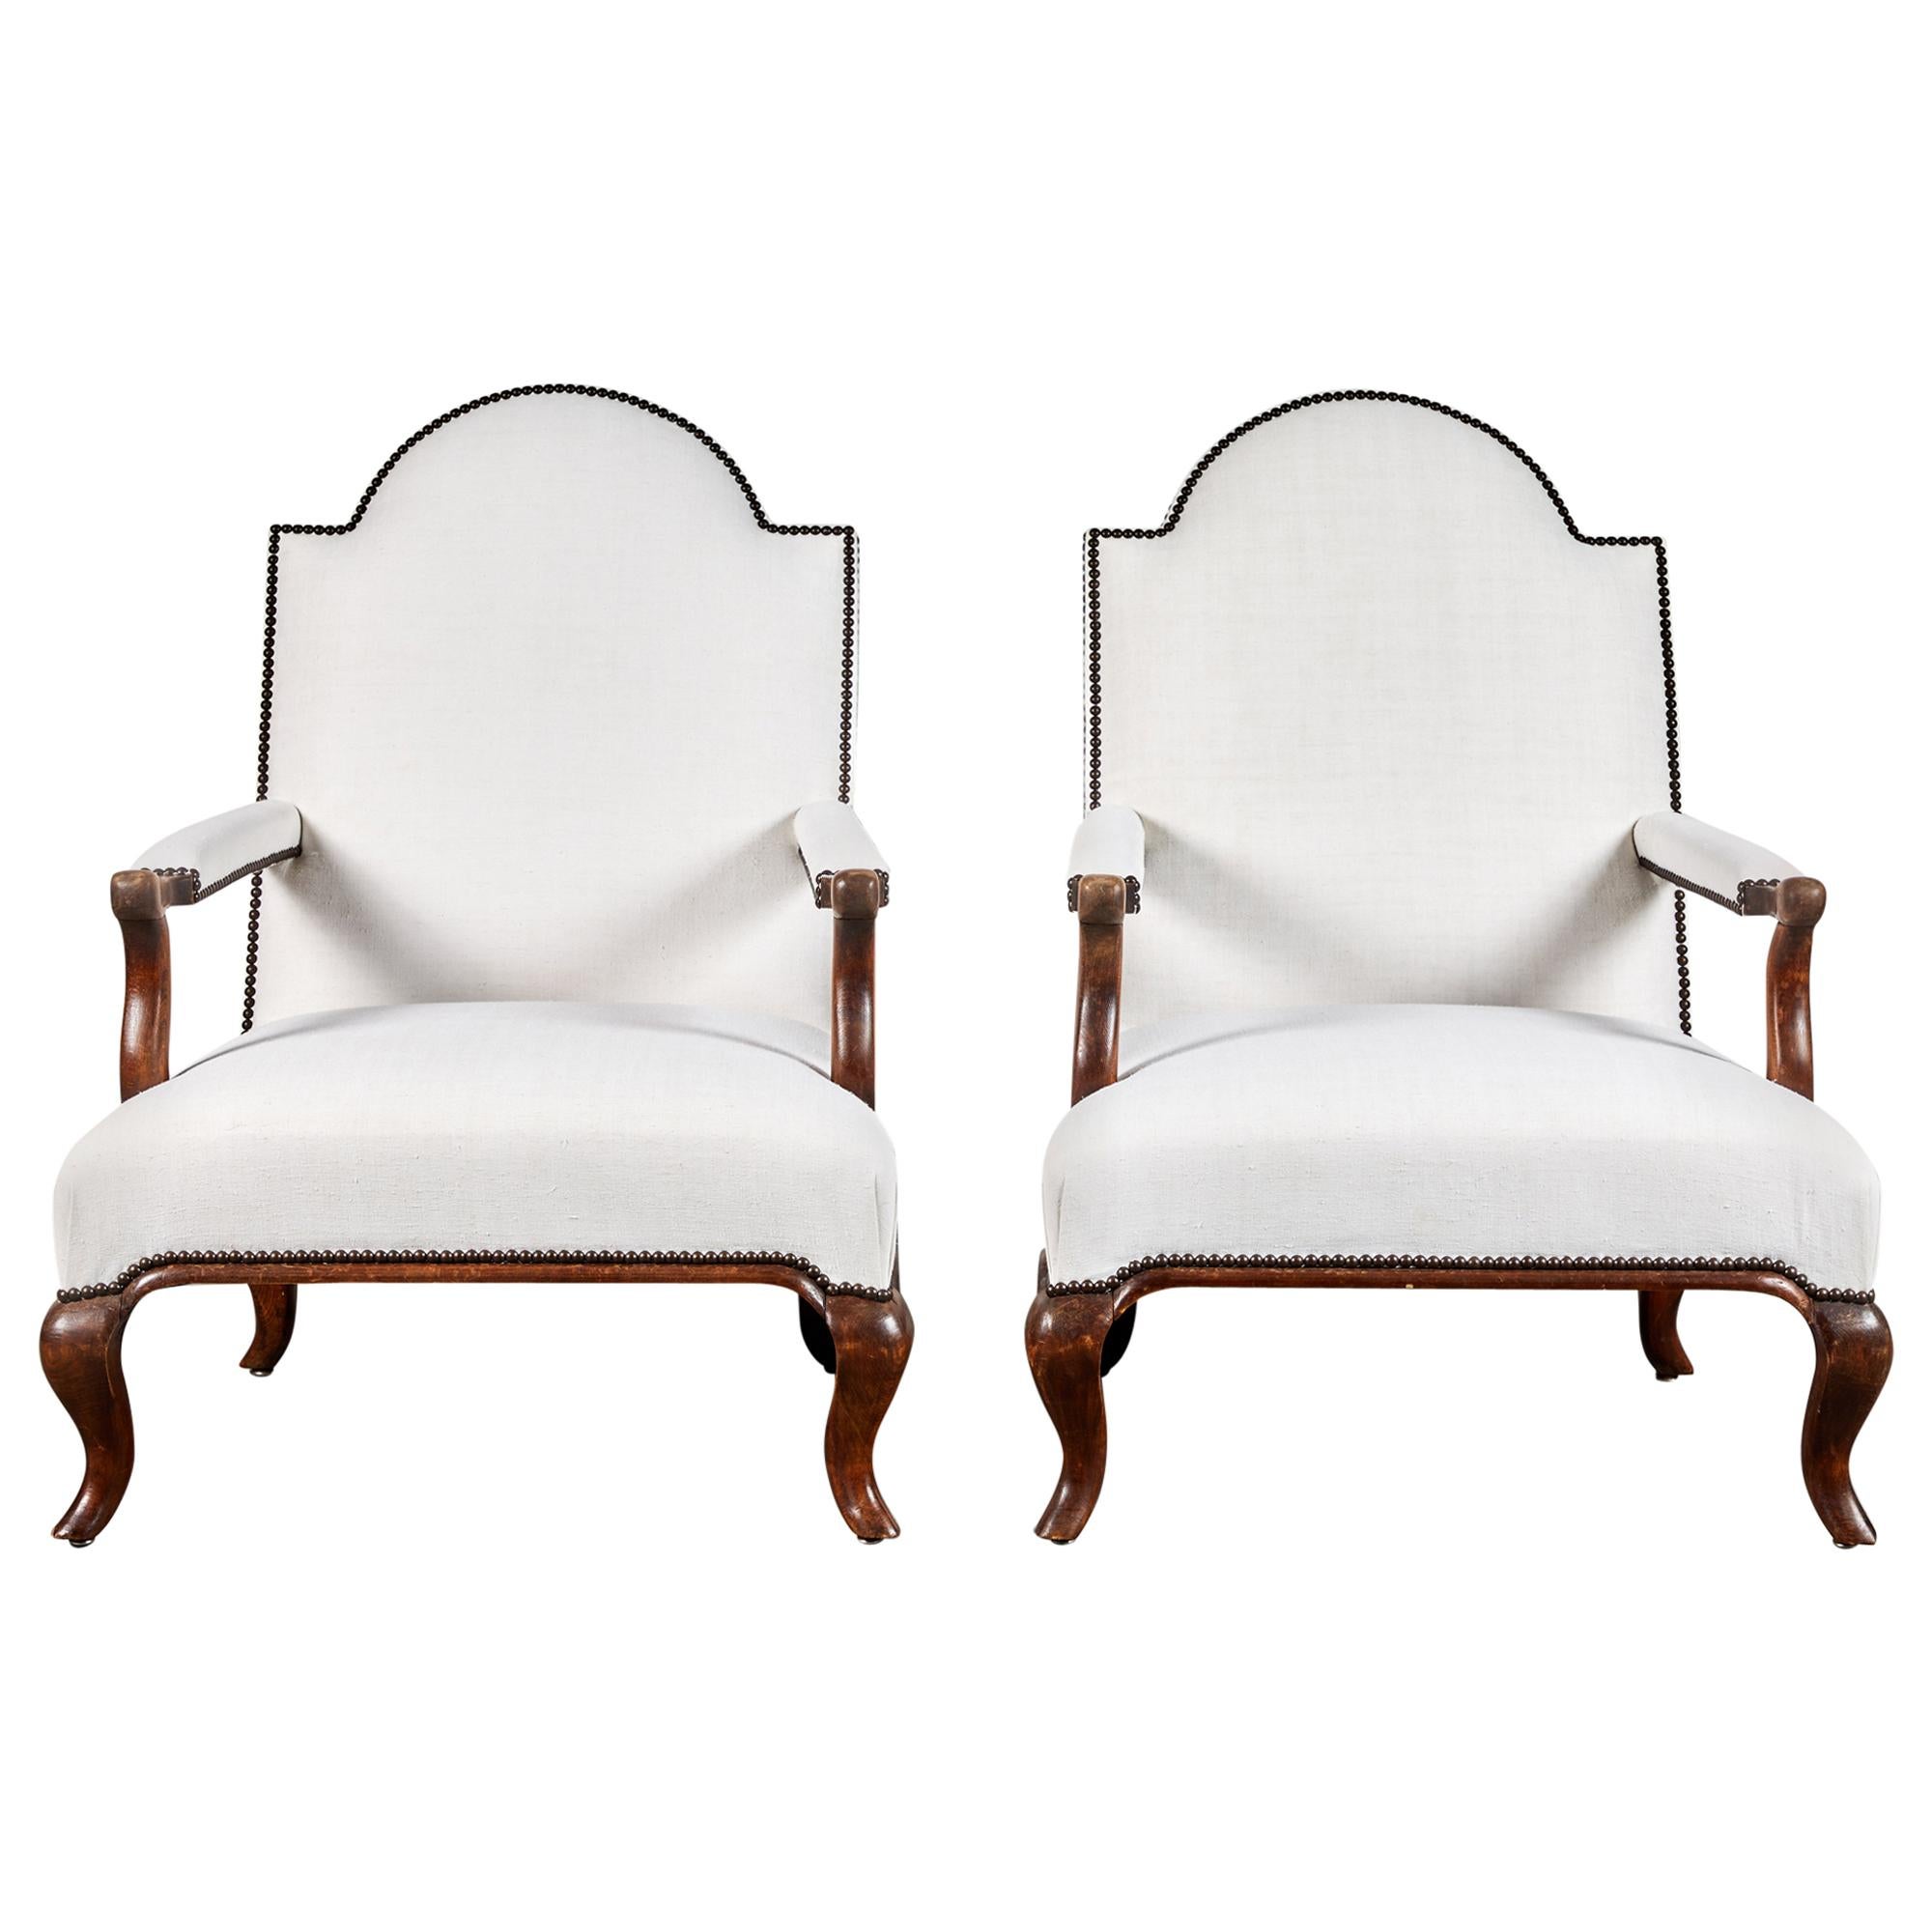 Pair of Neoclassical Italian Chairs